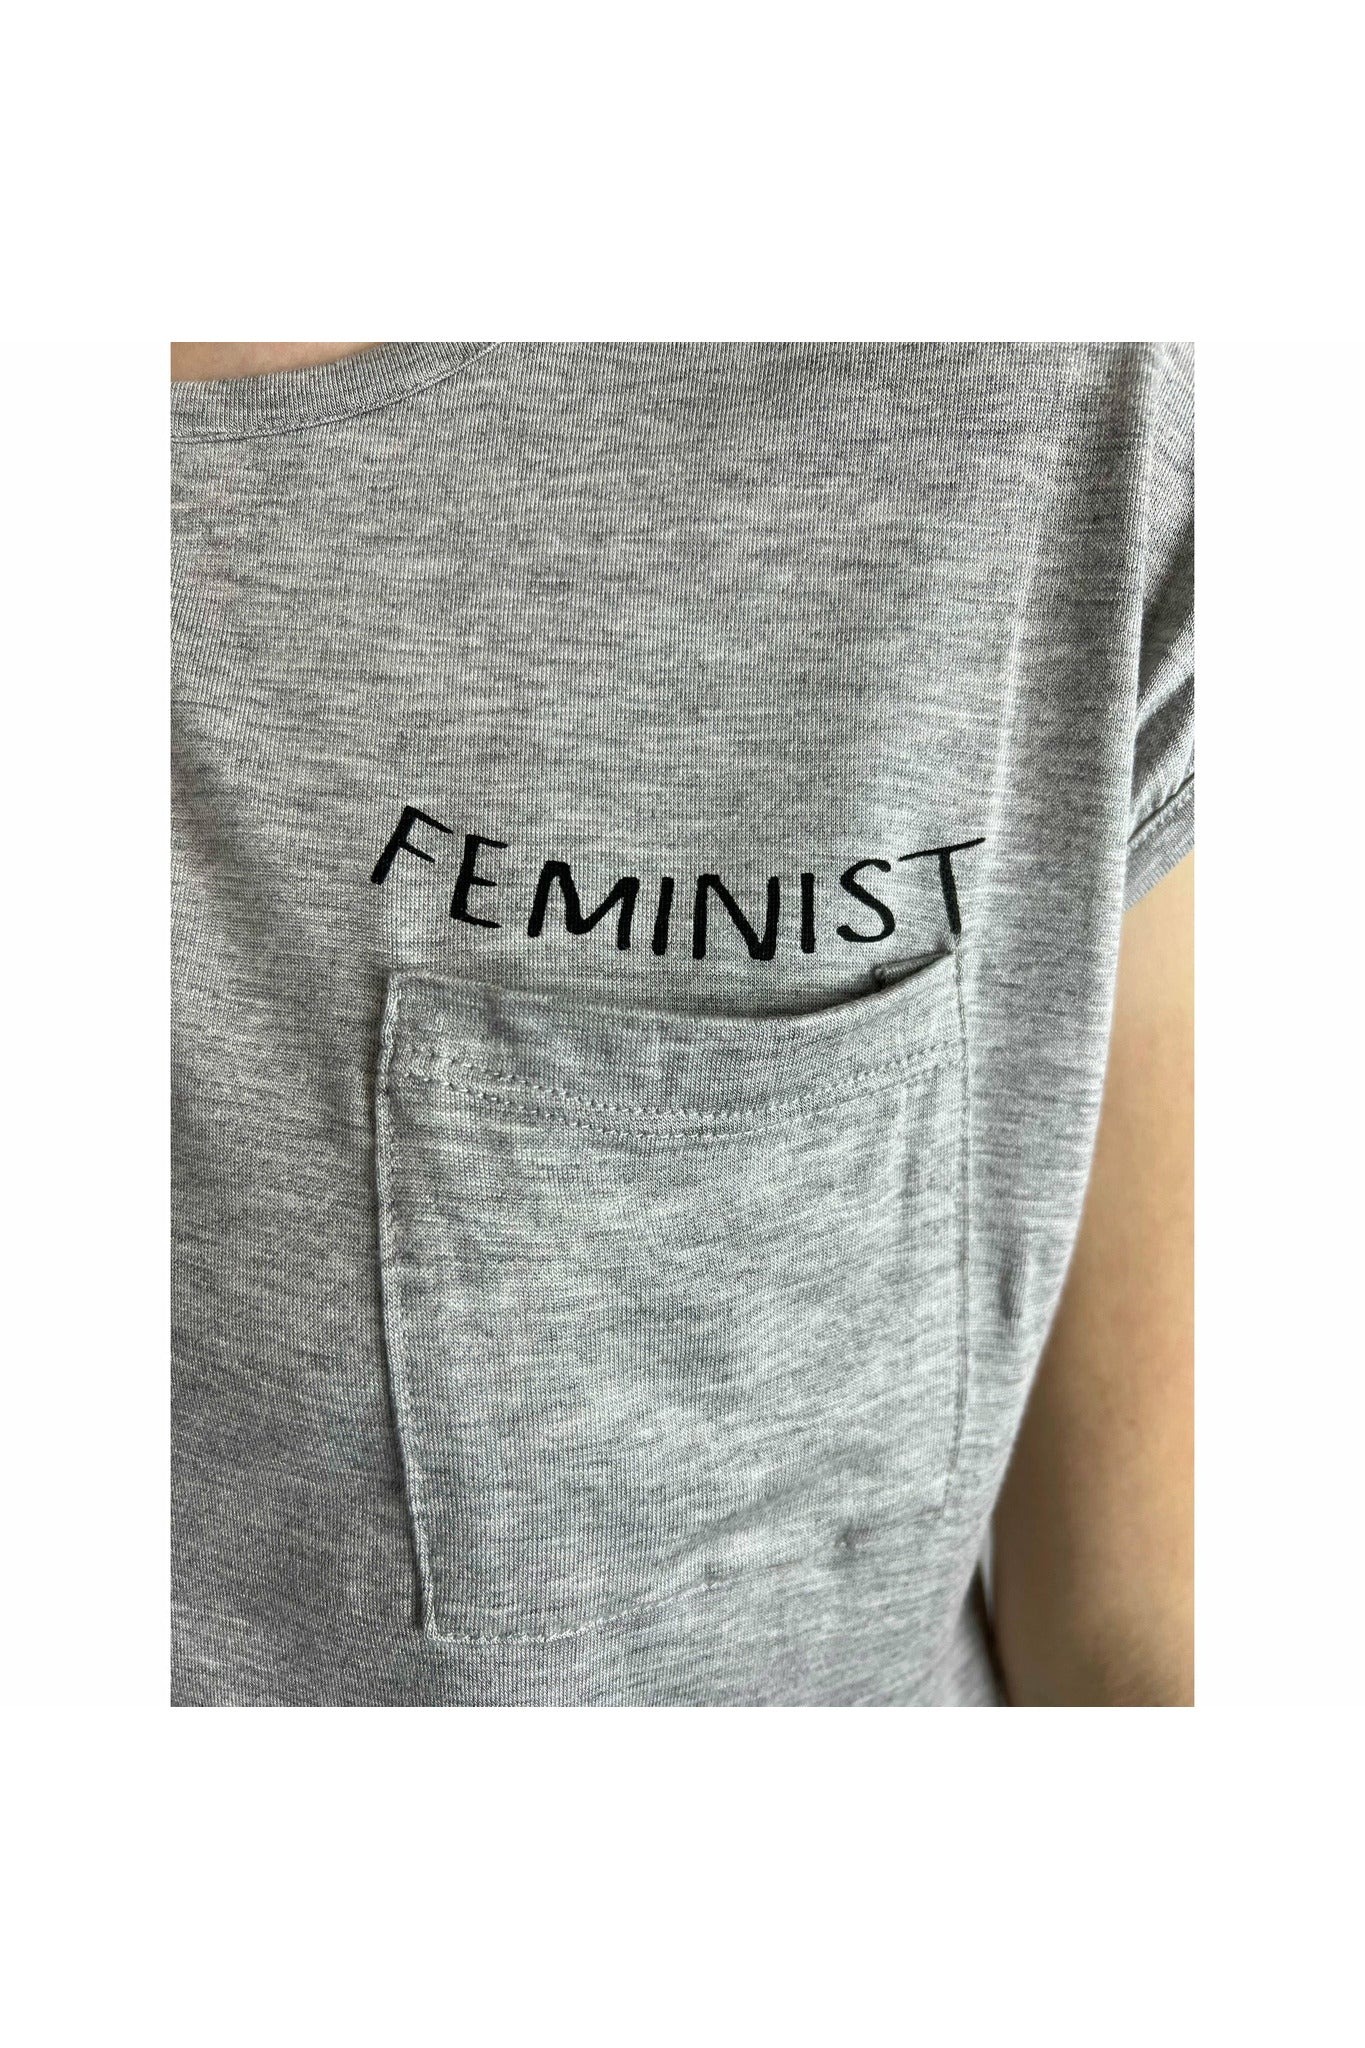 Feminist Gray Sleeveless Tee